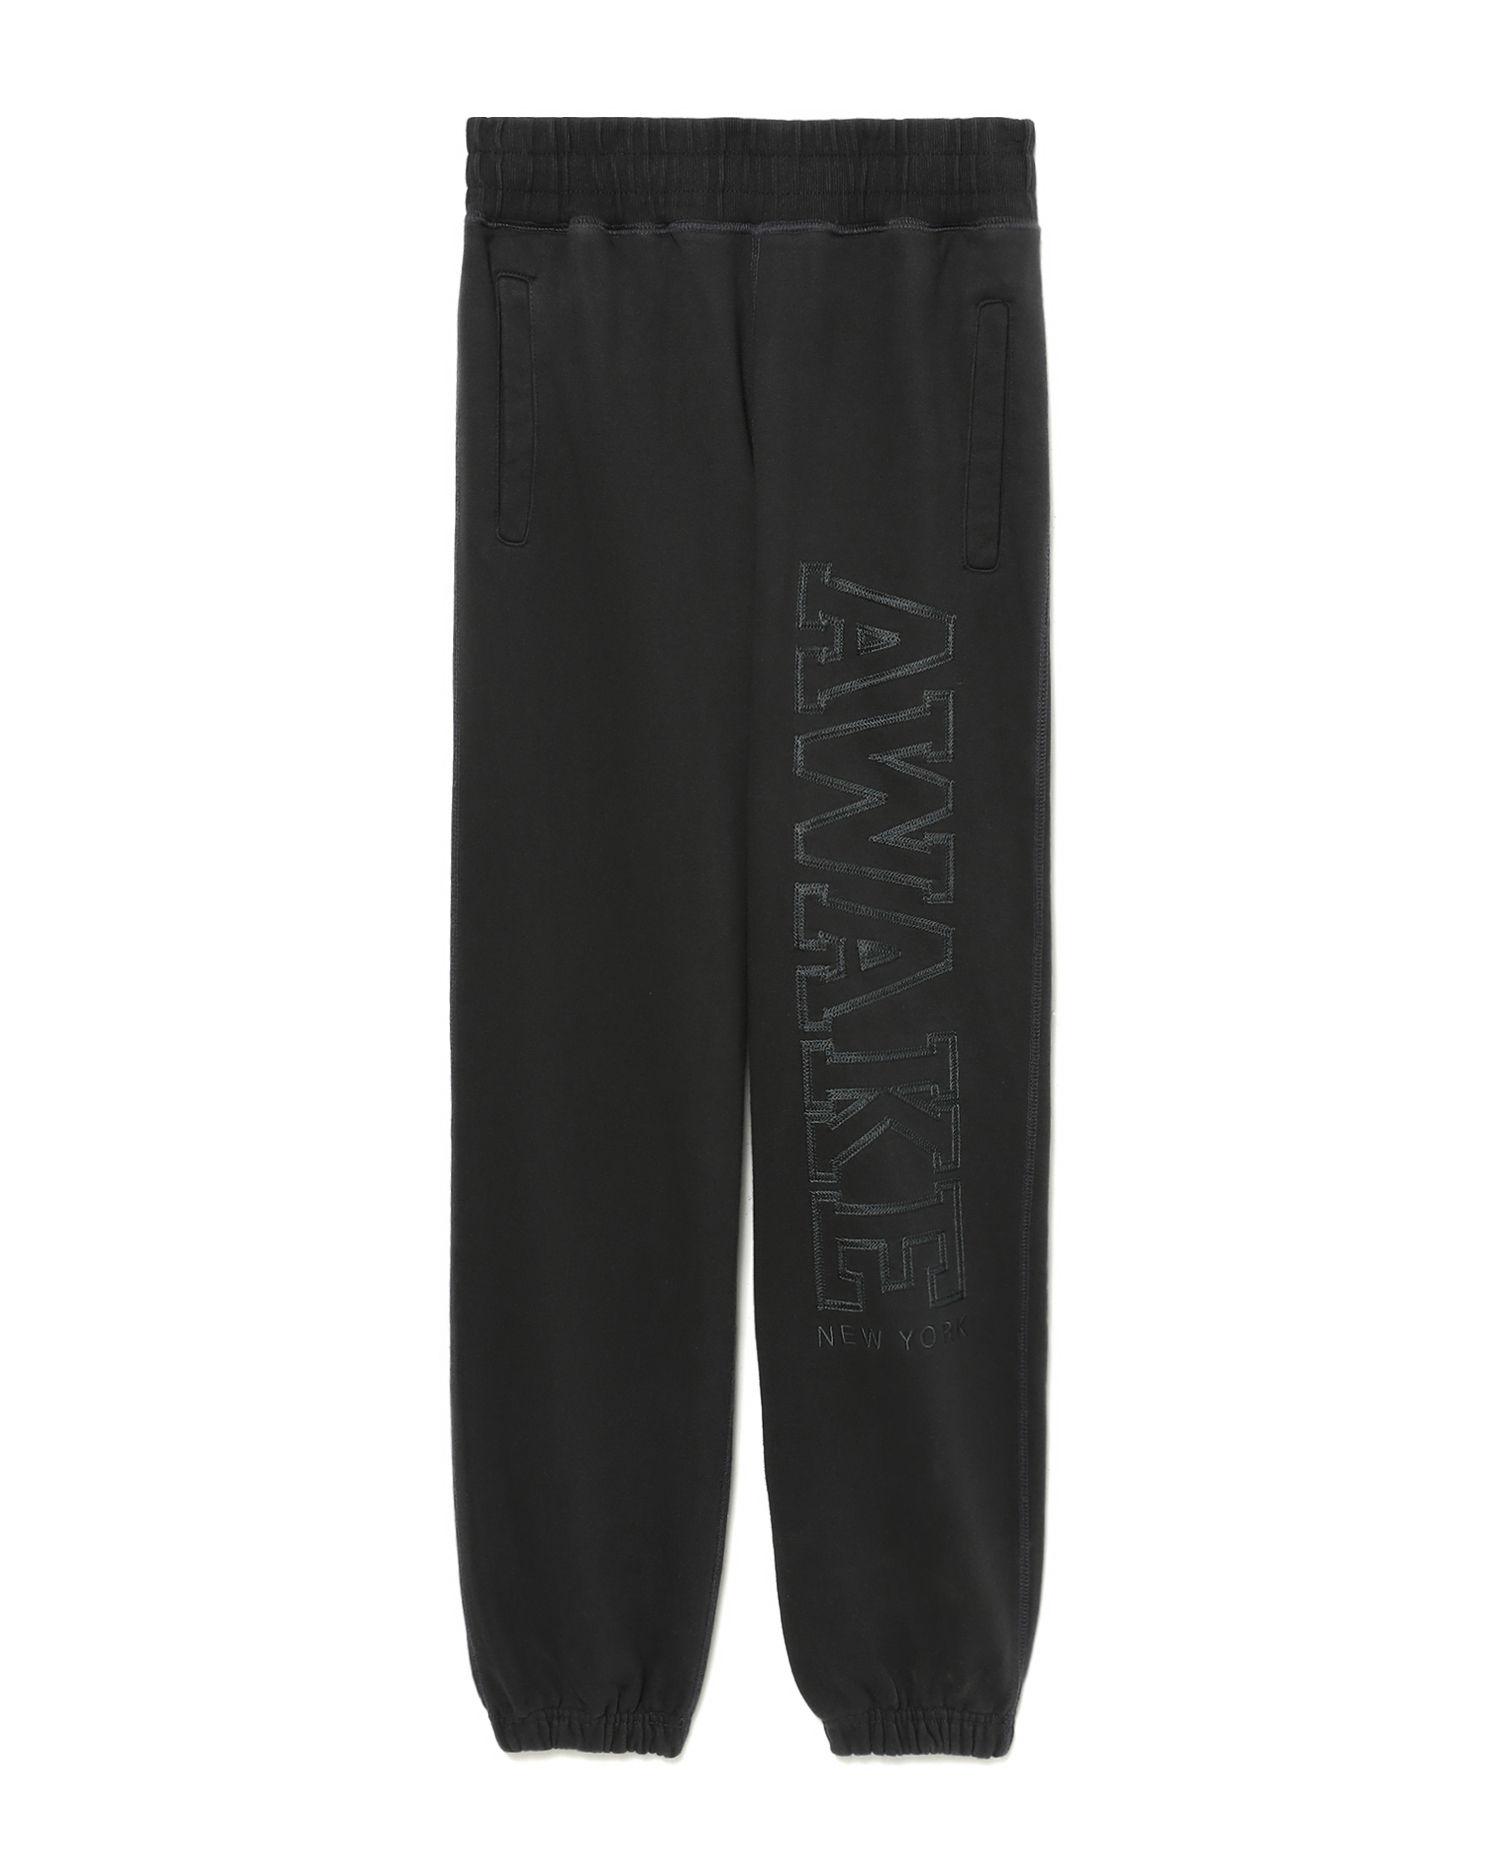 Military logo embroidered sweatpants by AWAKE NY